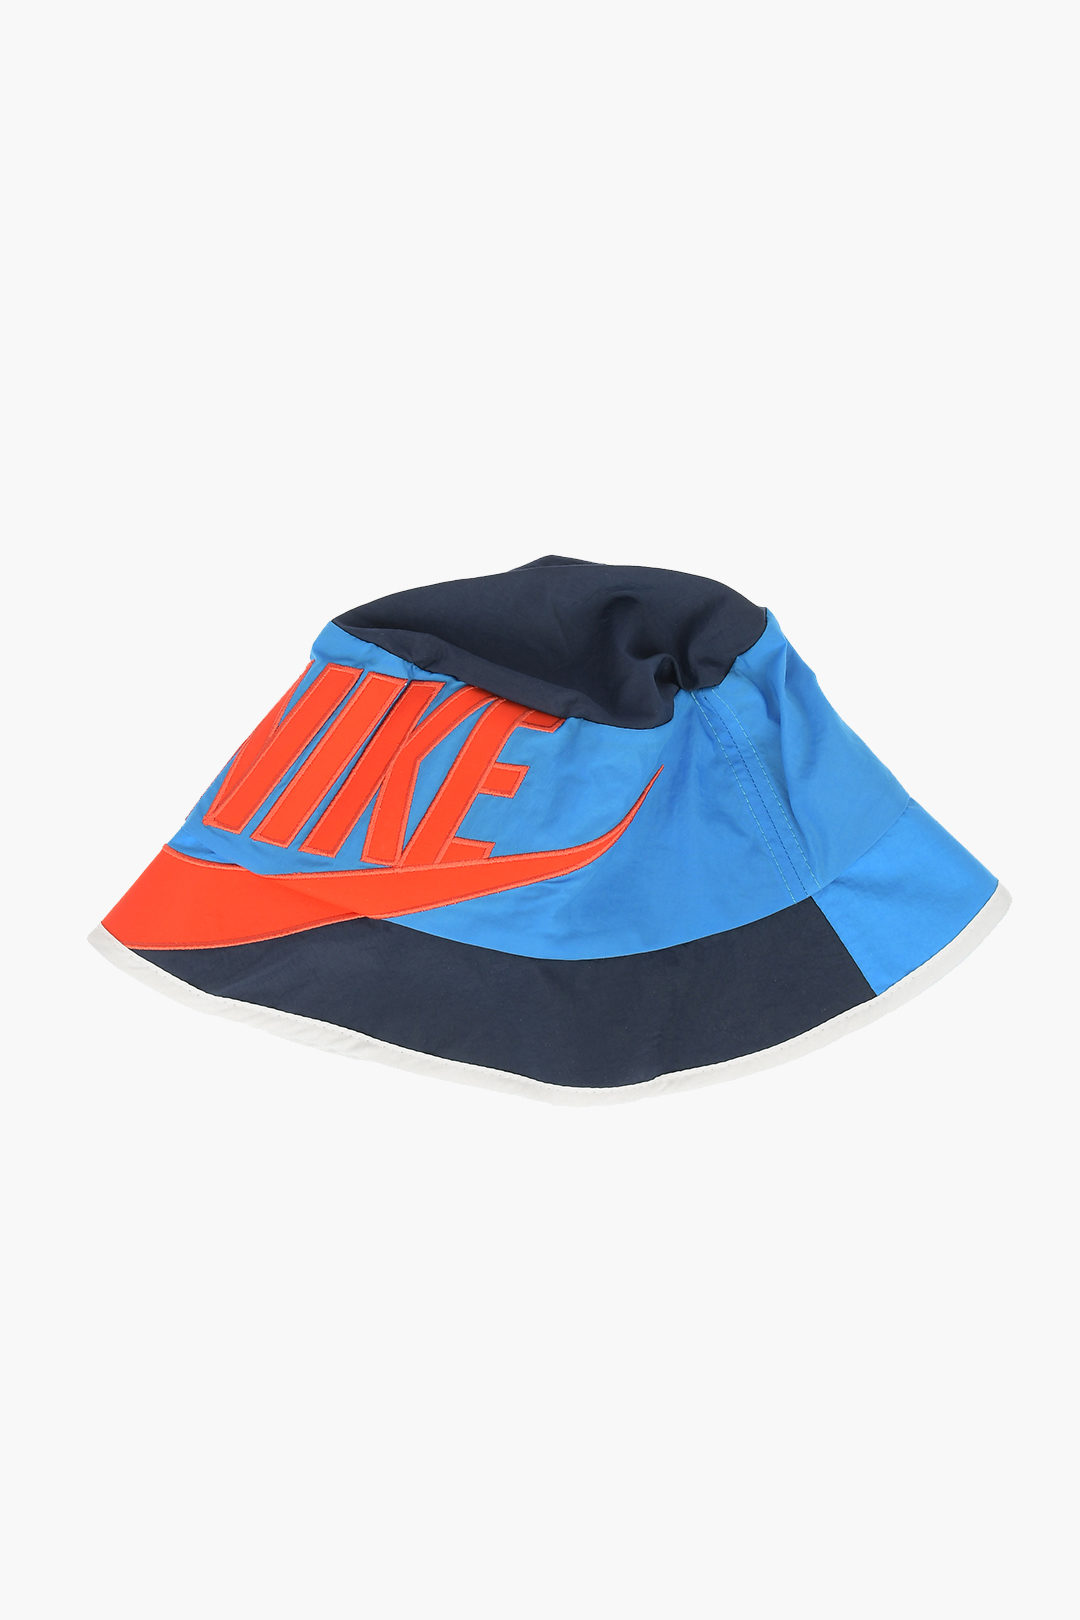 smog Vertrek interferentie Nike Nylon fishing Hat men - Glamood Outlet